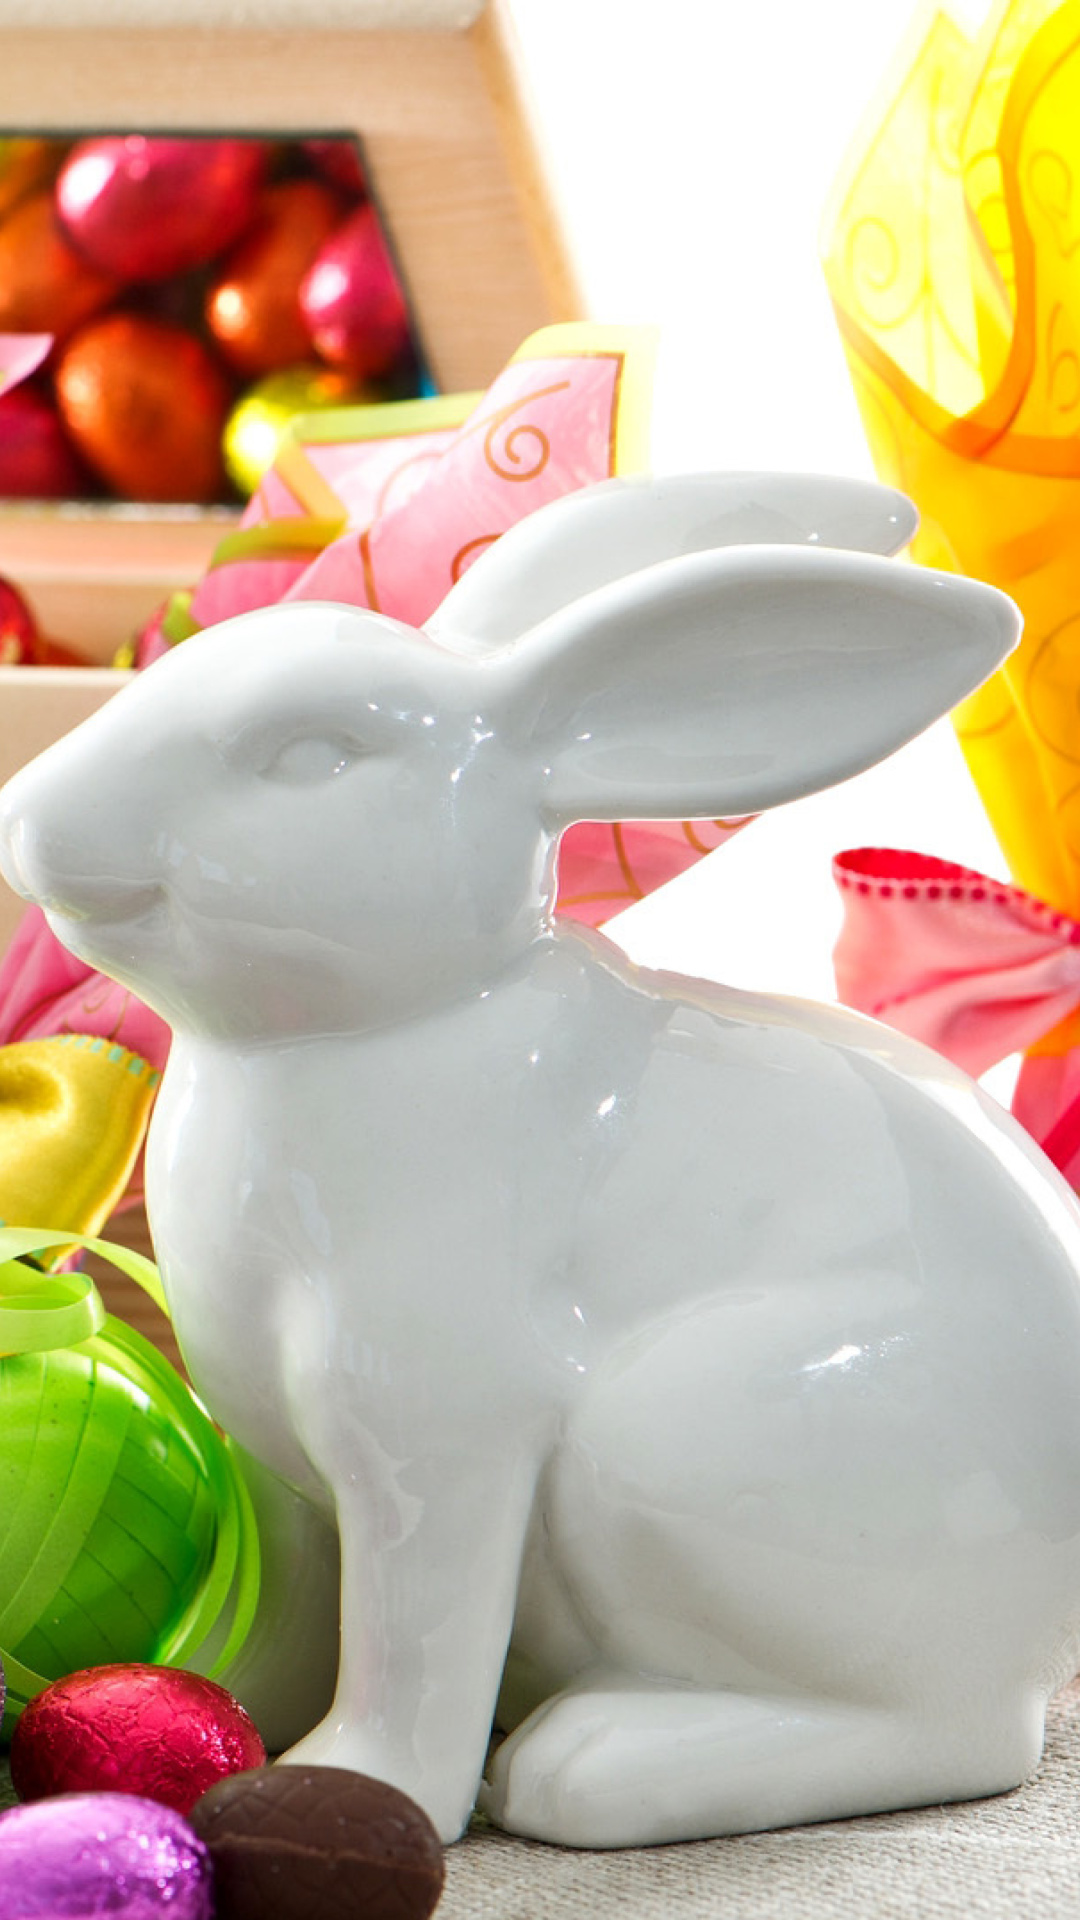 Porcelain Easter hares wallpaper 1080x1920